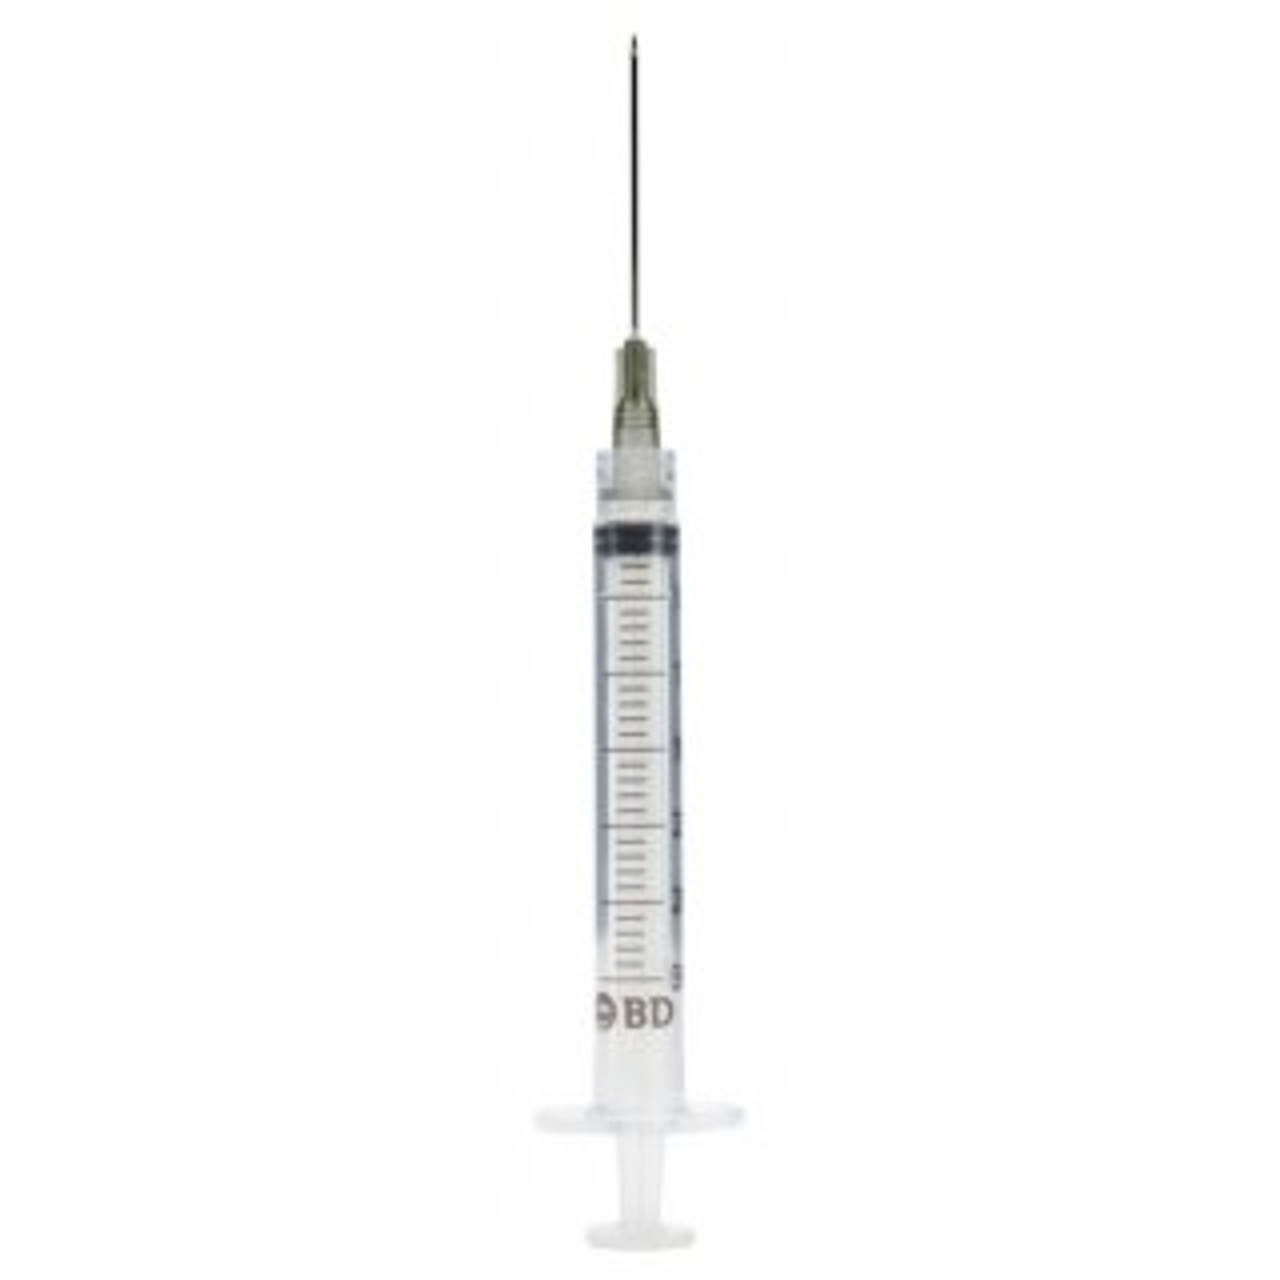 Monoject Luer Lock Syringe W/Needle [3 mL - 20 X 3/4] (1 Count)